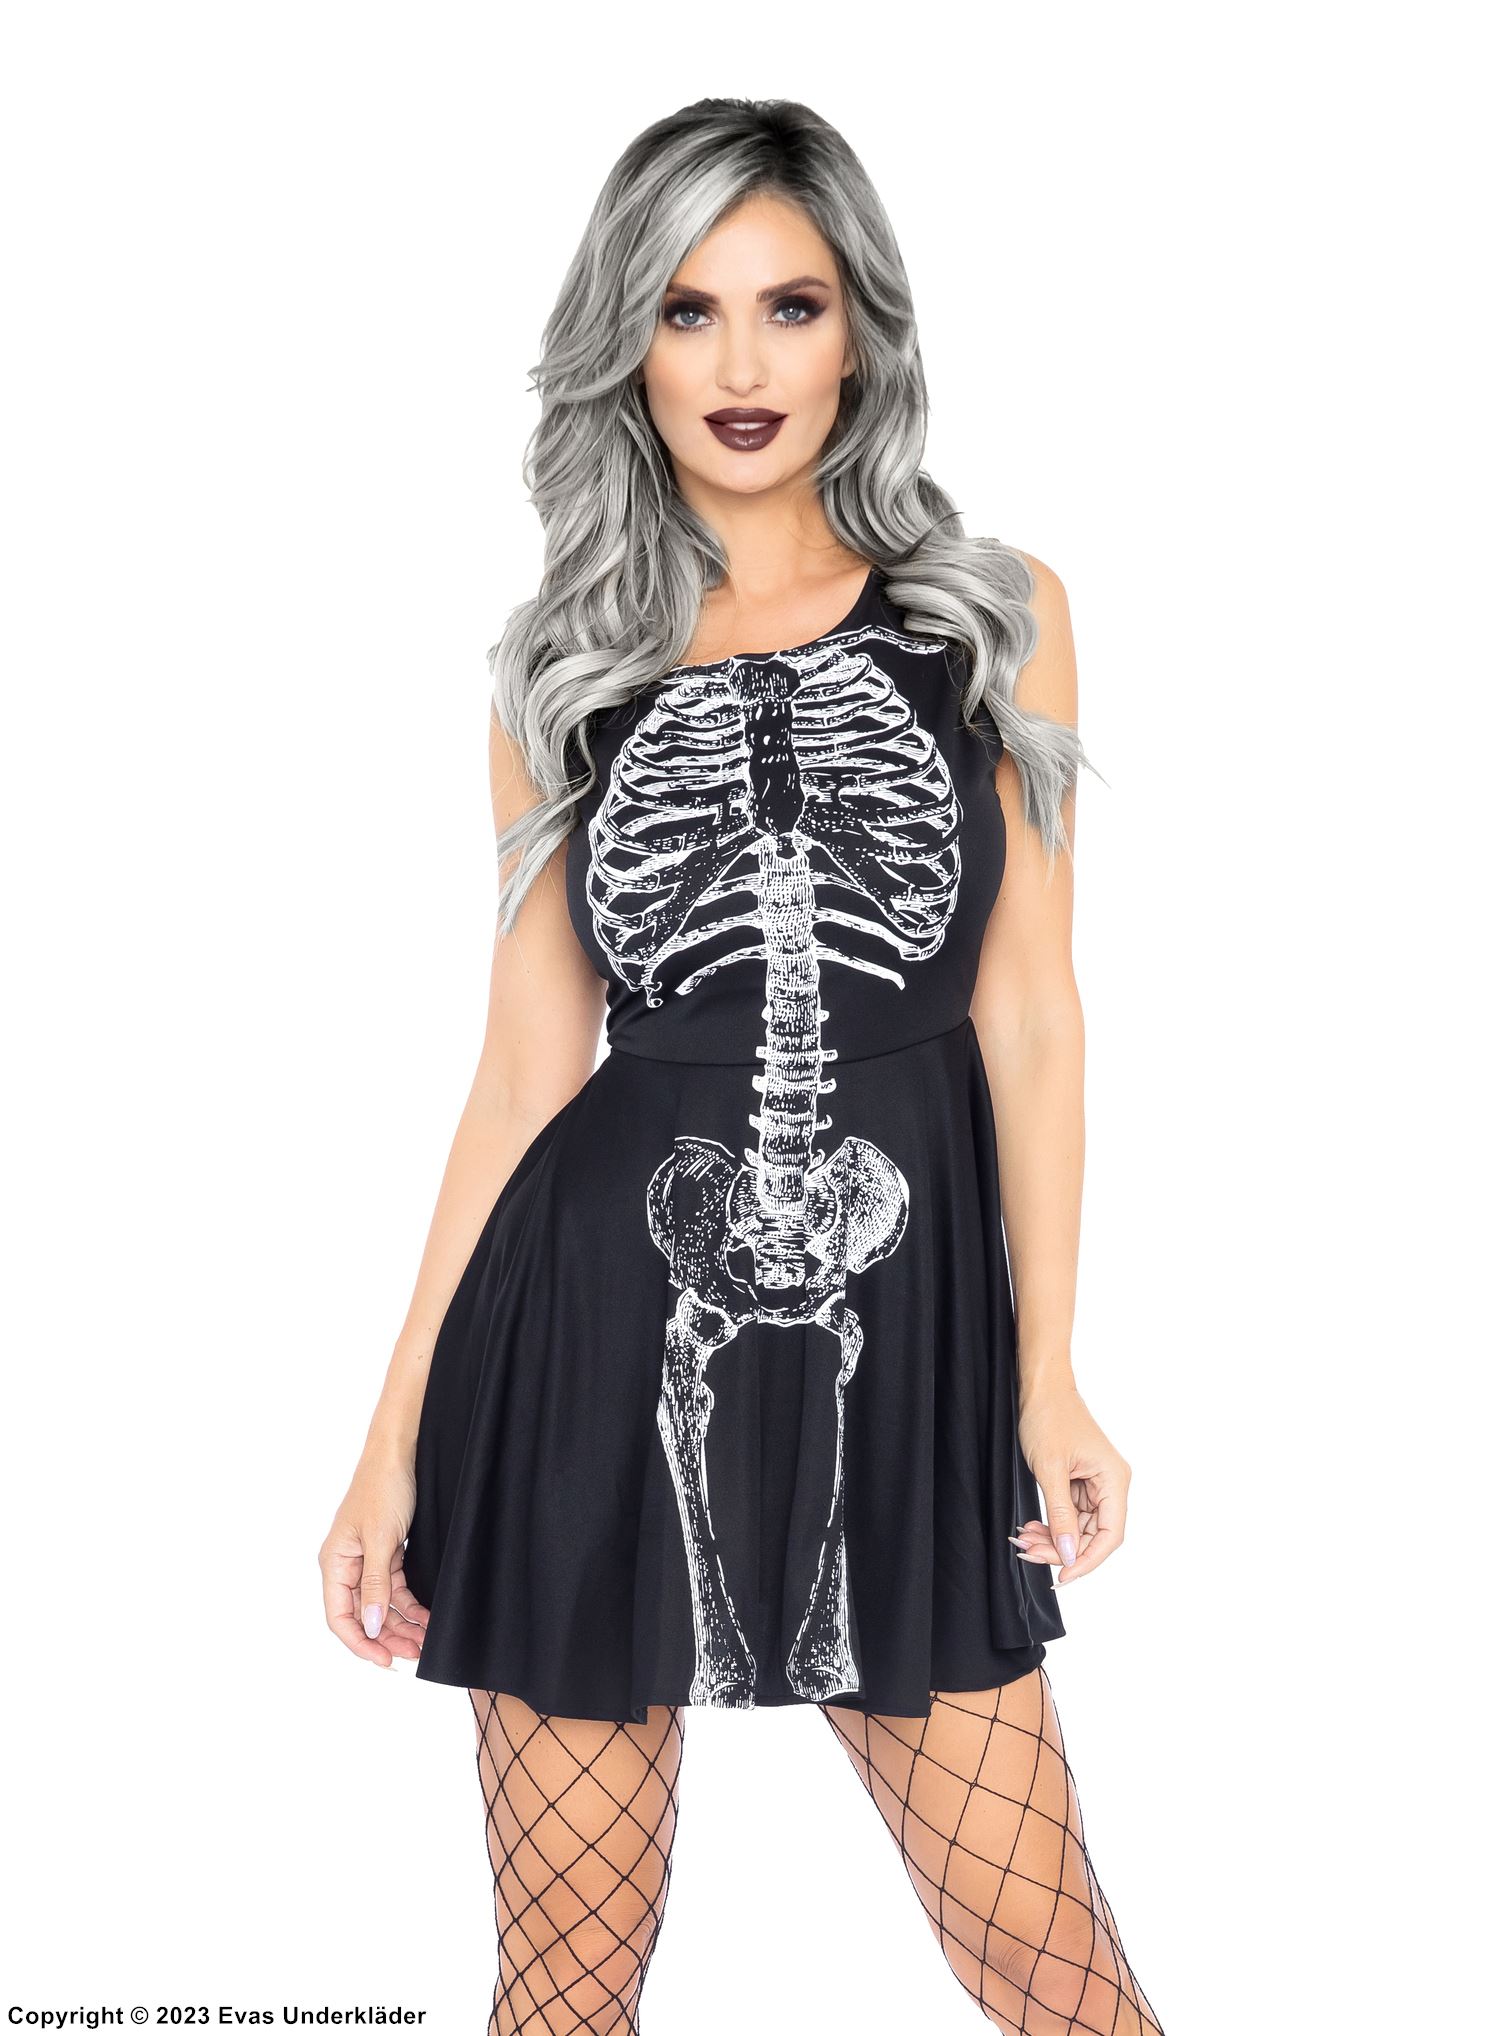 Halloween theme, costume dress, skeleton